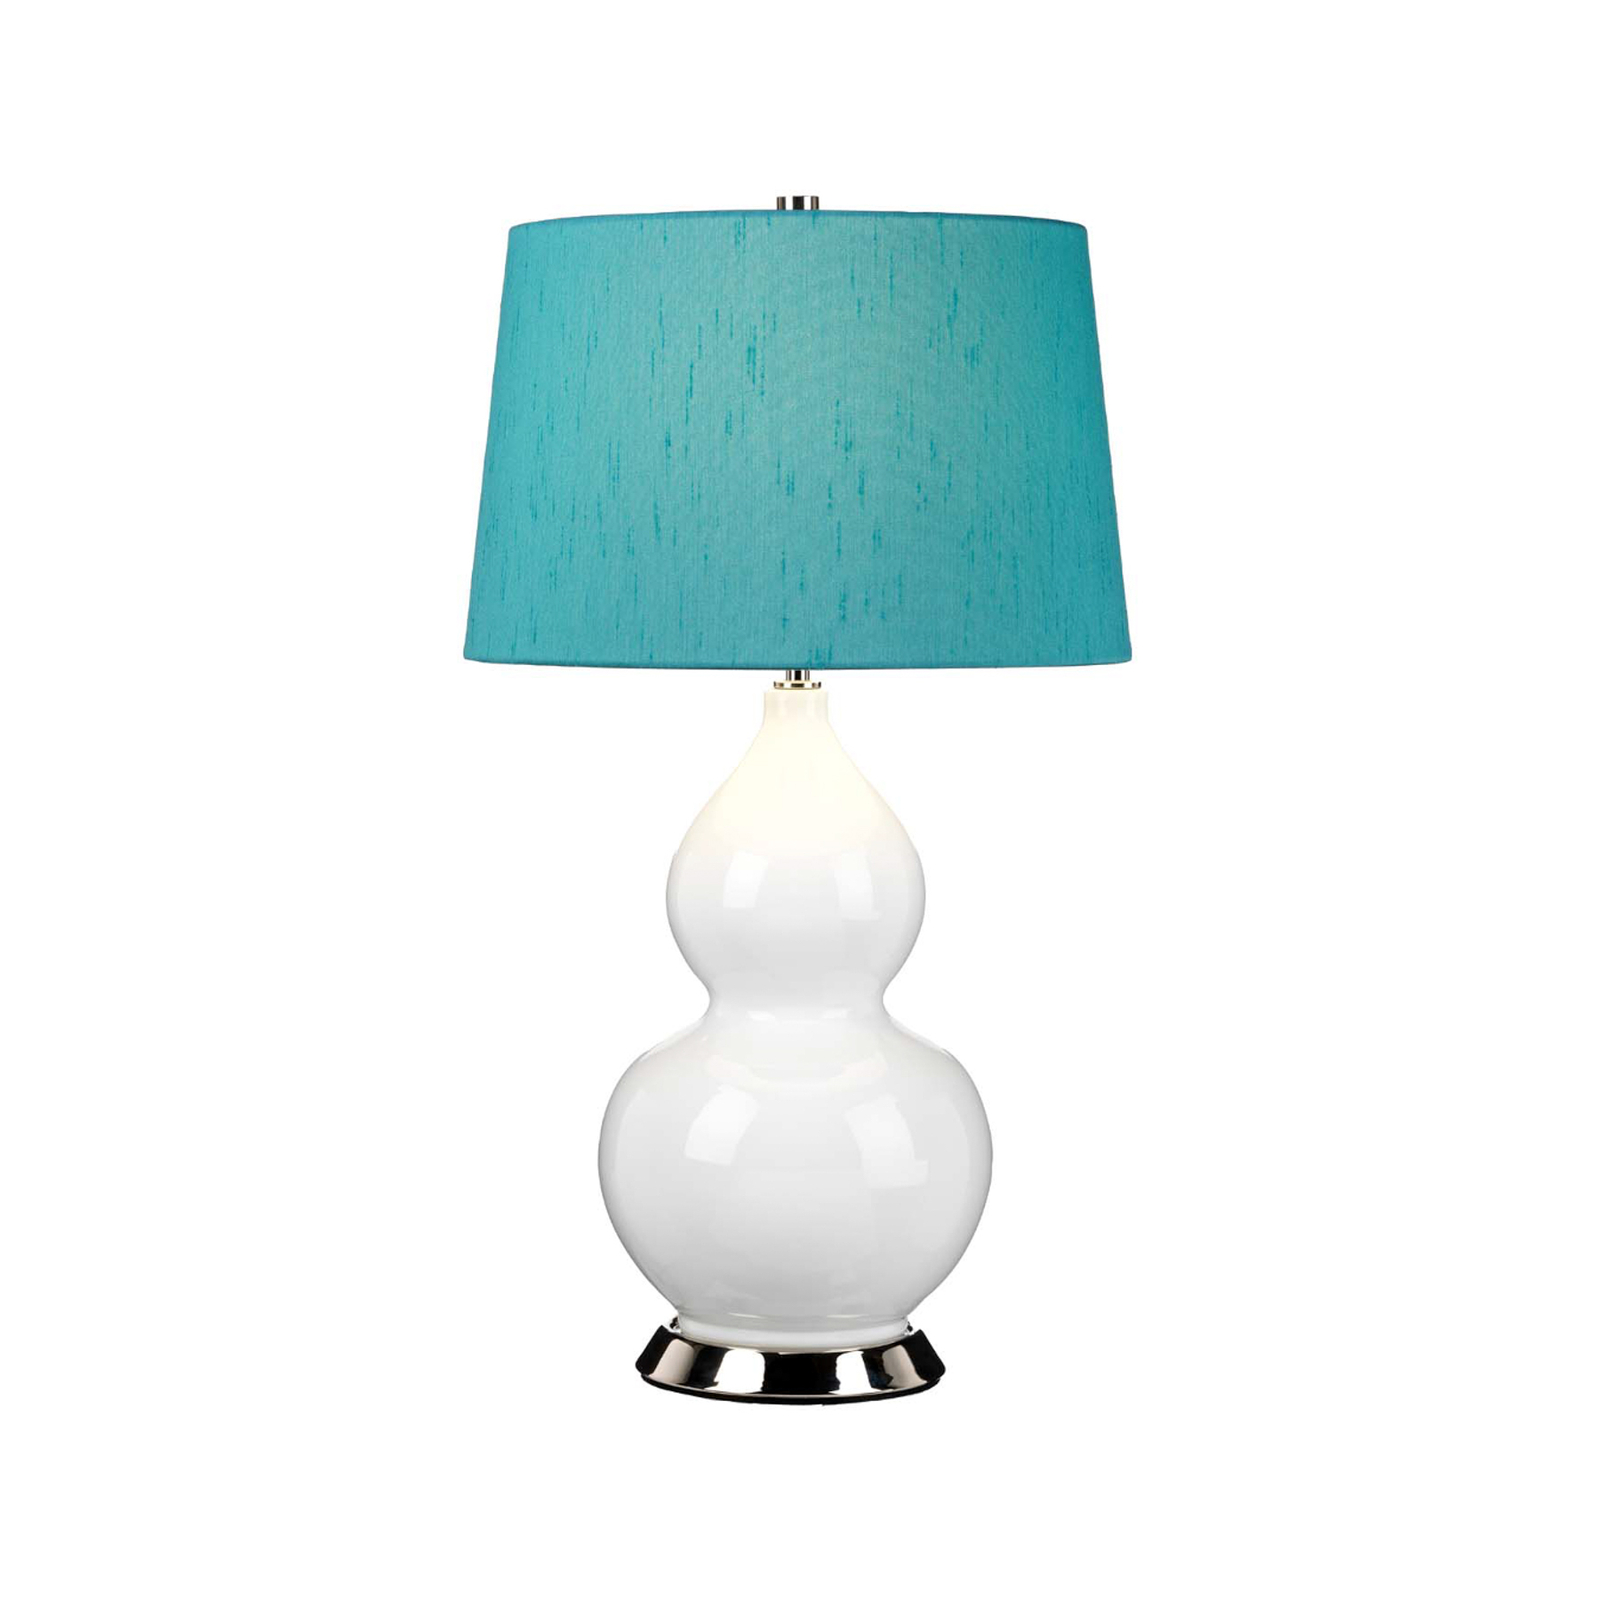 Isla polished nickel/turquoise textile table lamp